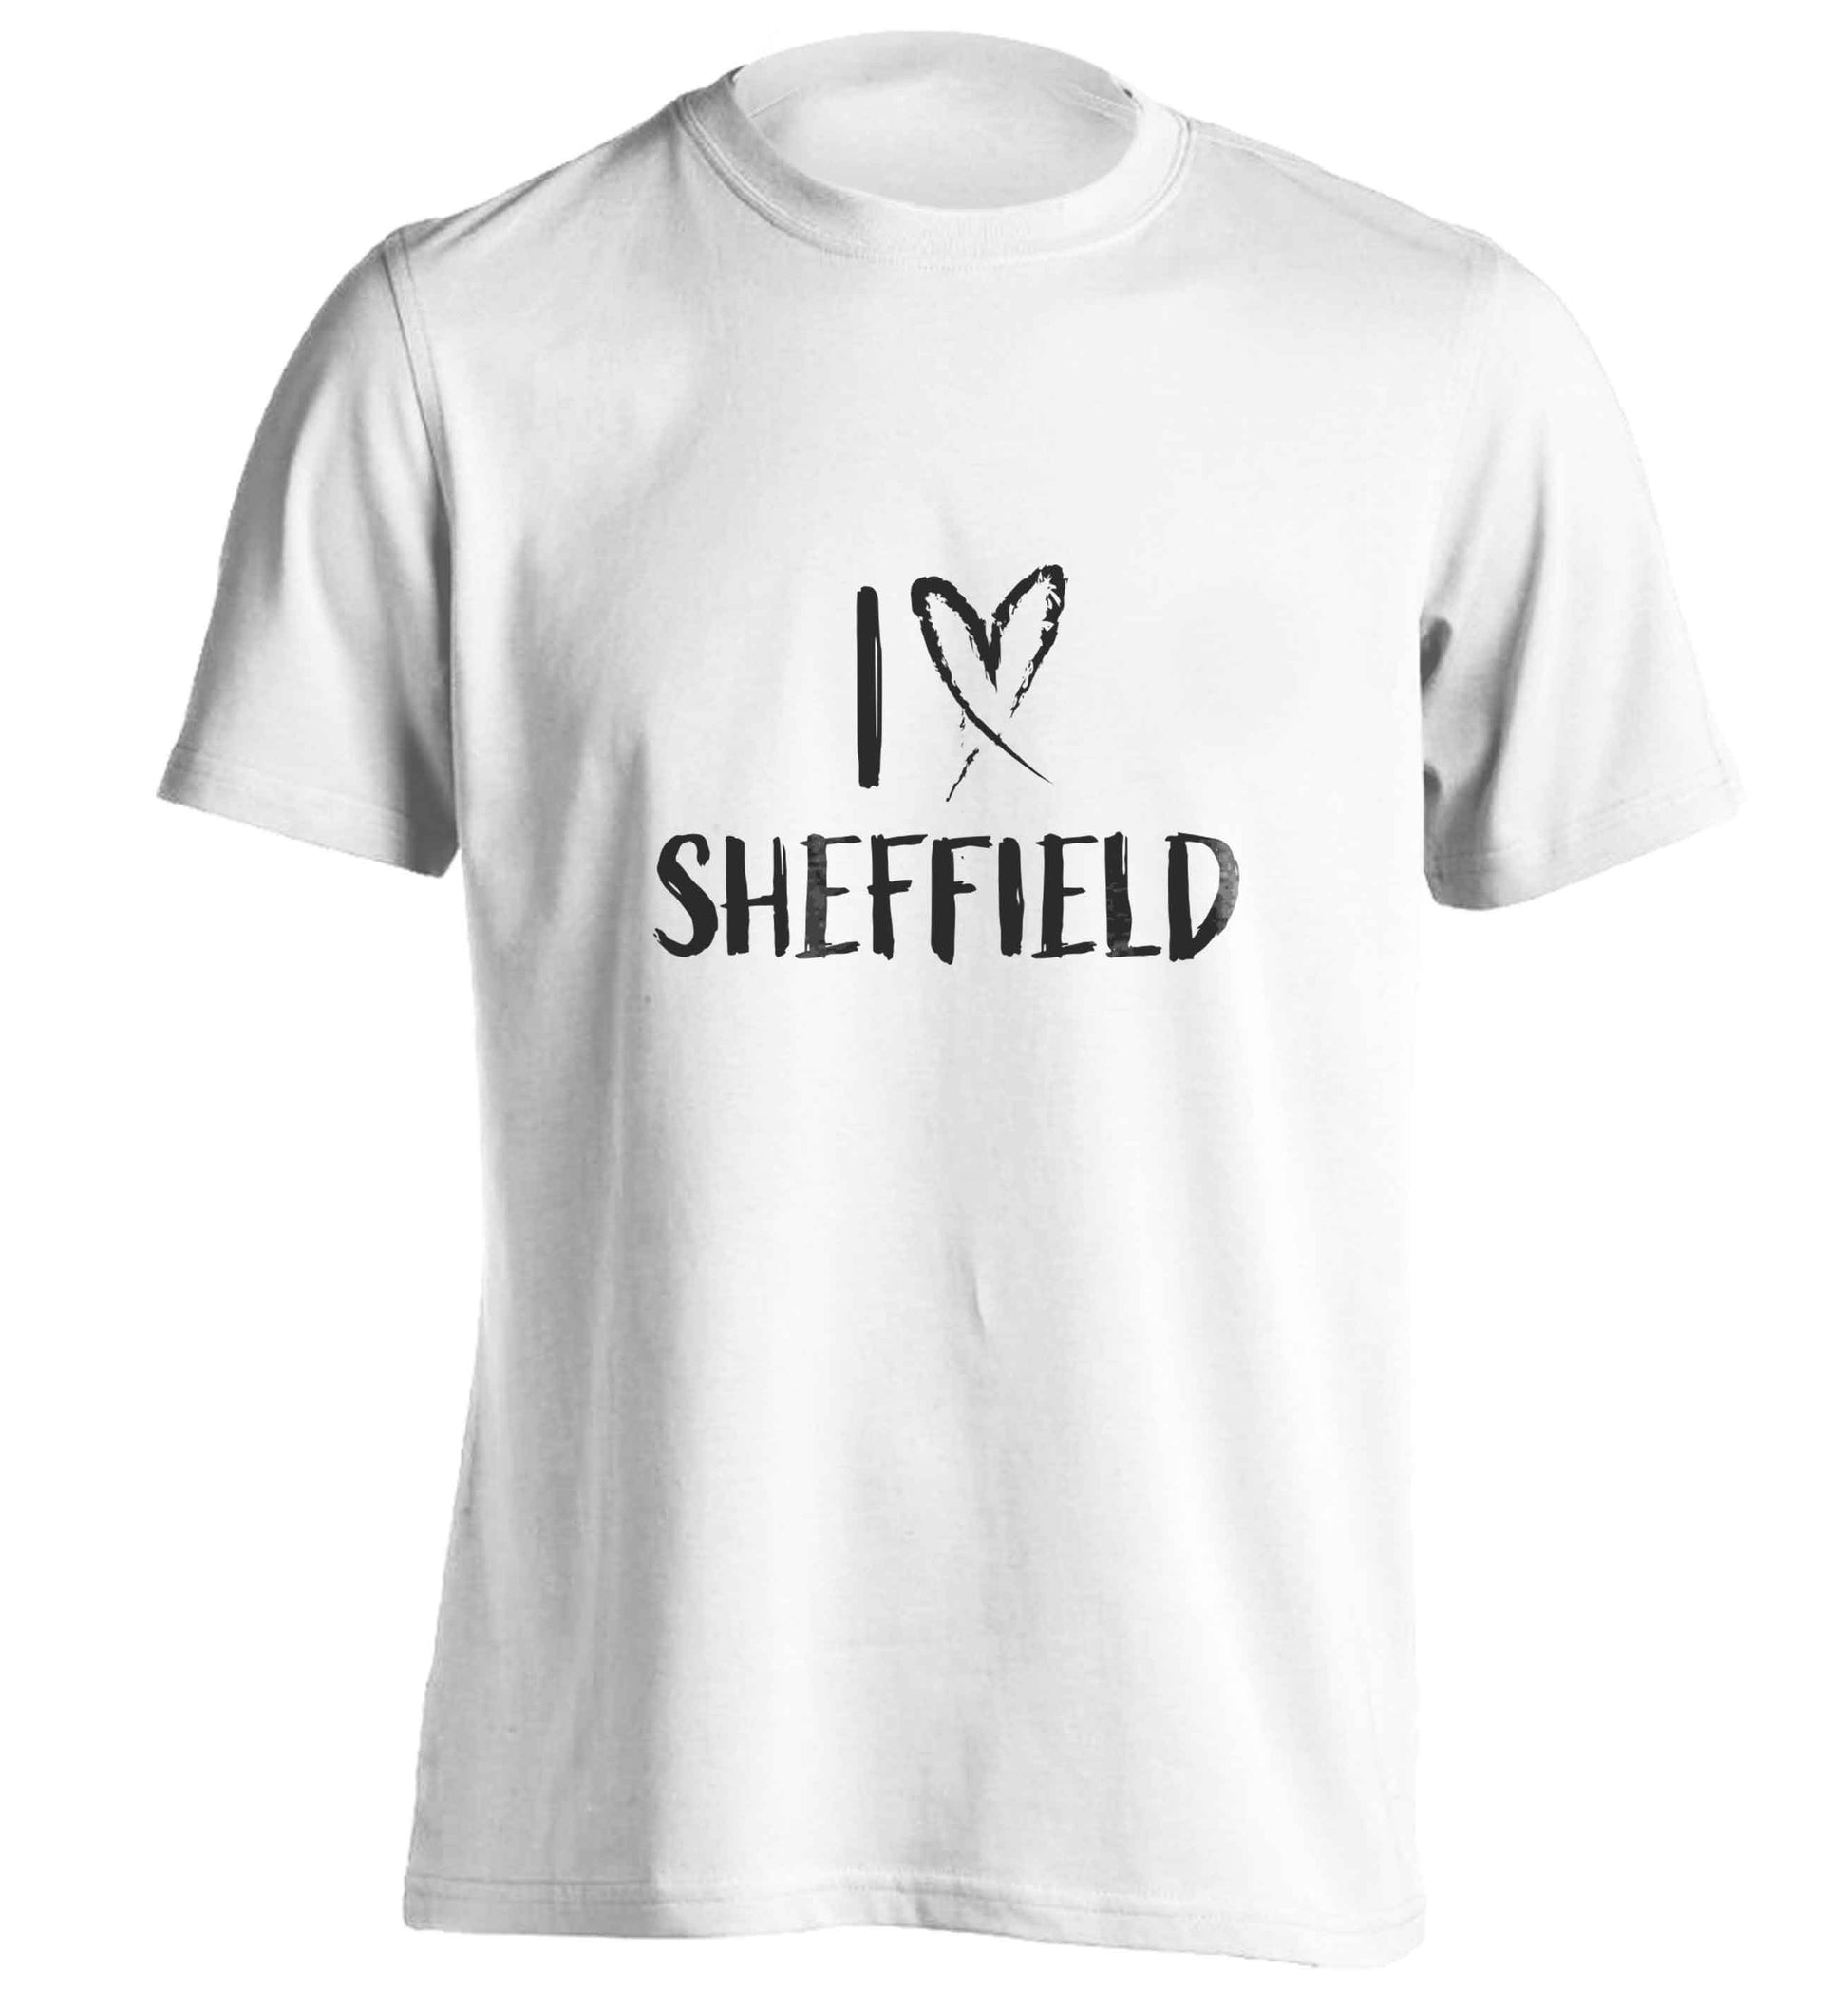 I love Sheffield adults unisex white Tshirt 2XL